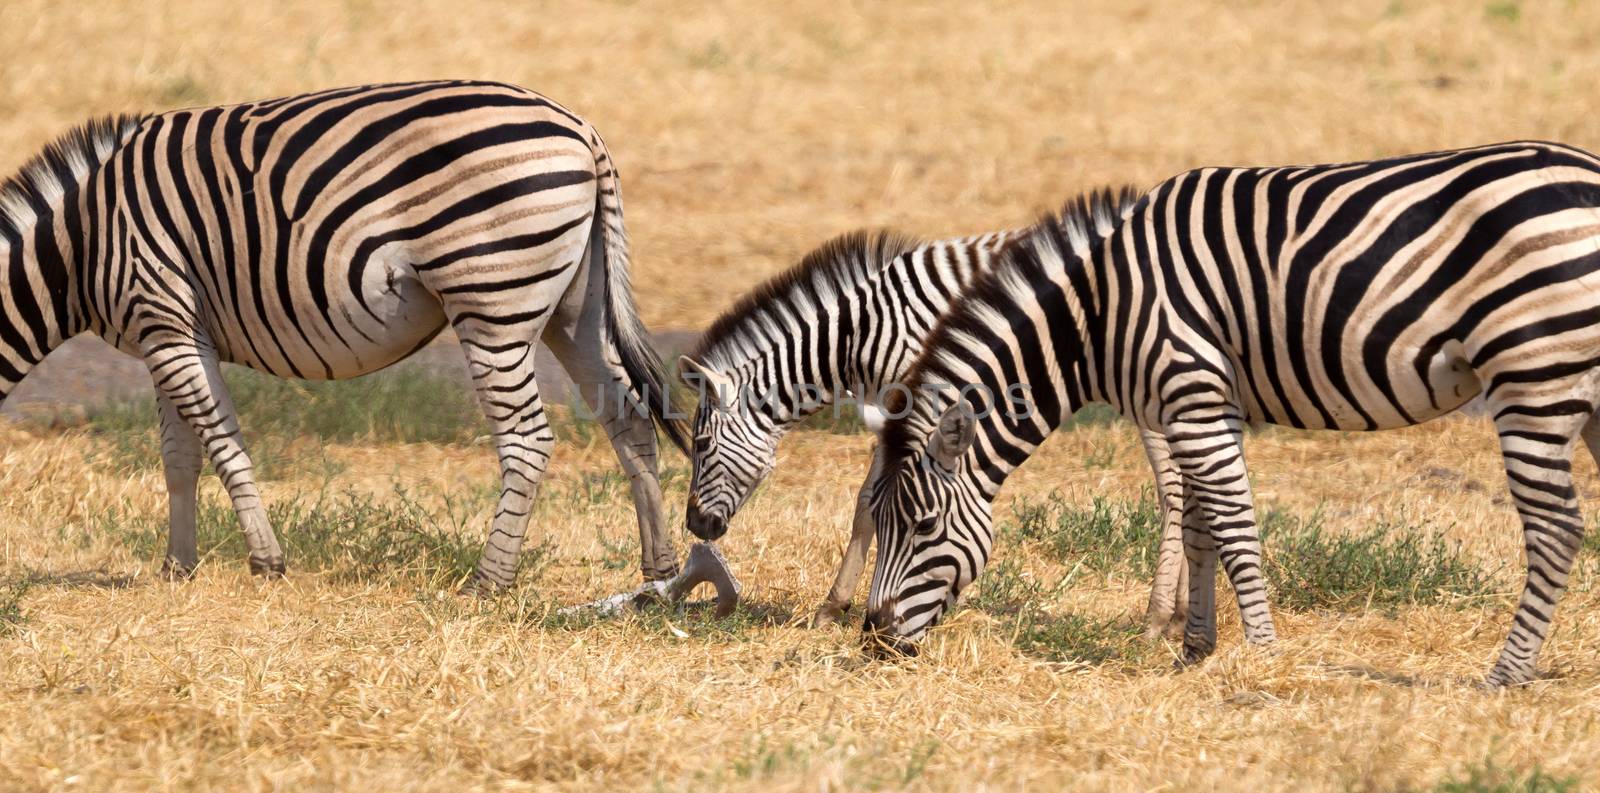 Damara zebra (Equus burchelli antiquorum) by michaklootwijk